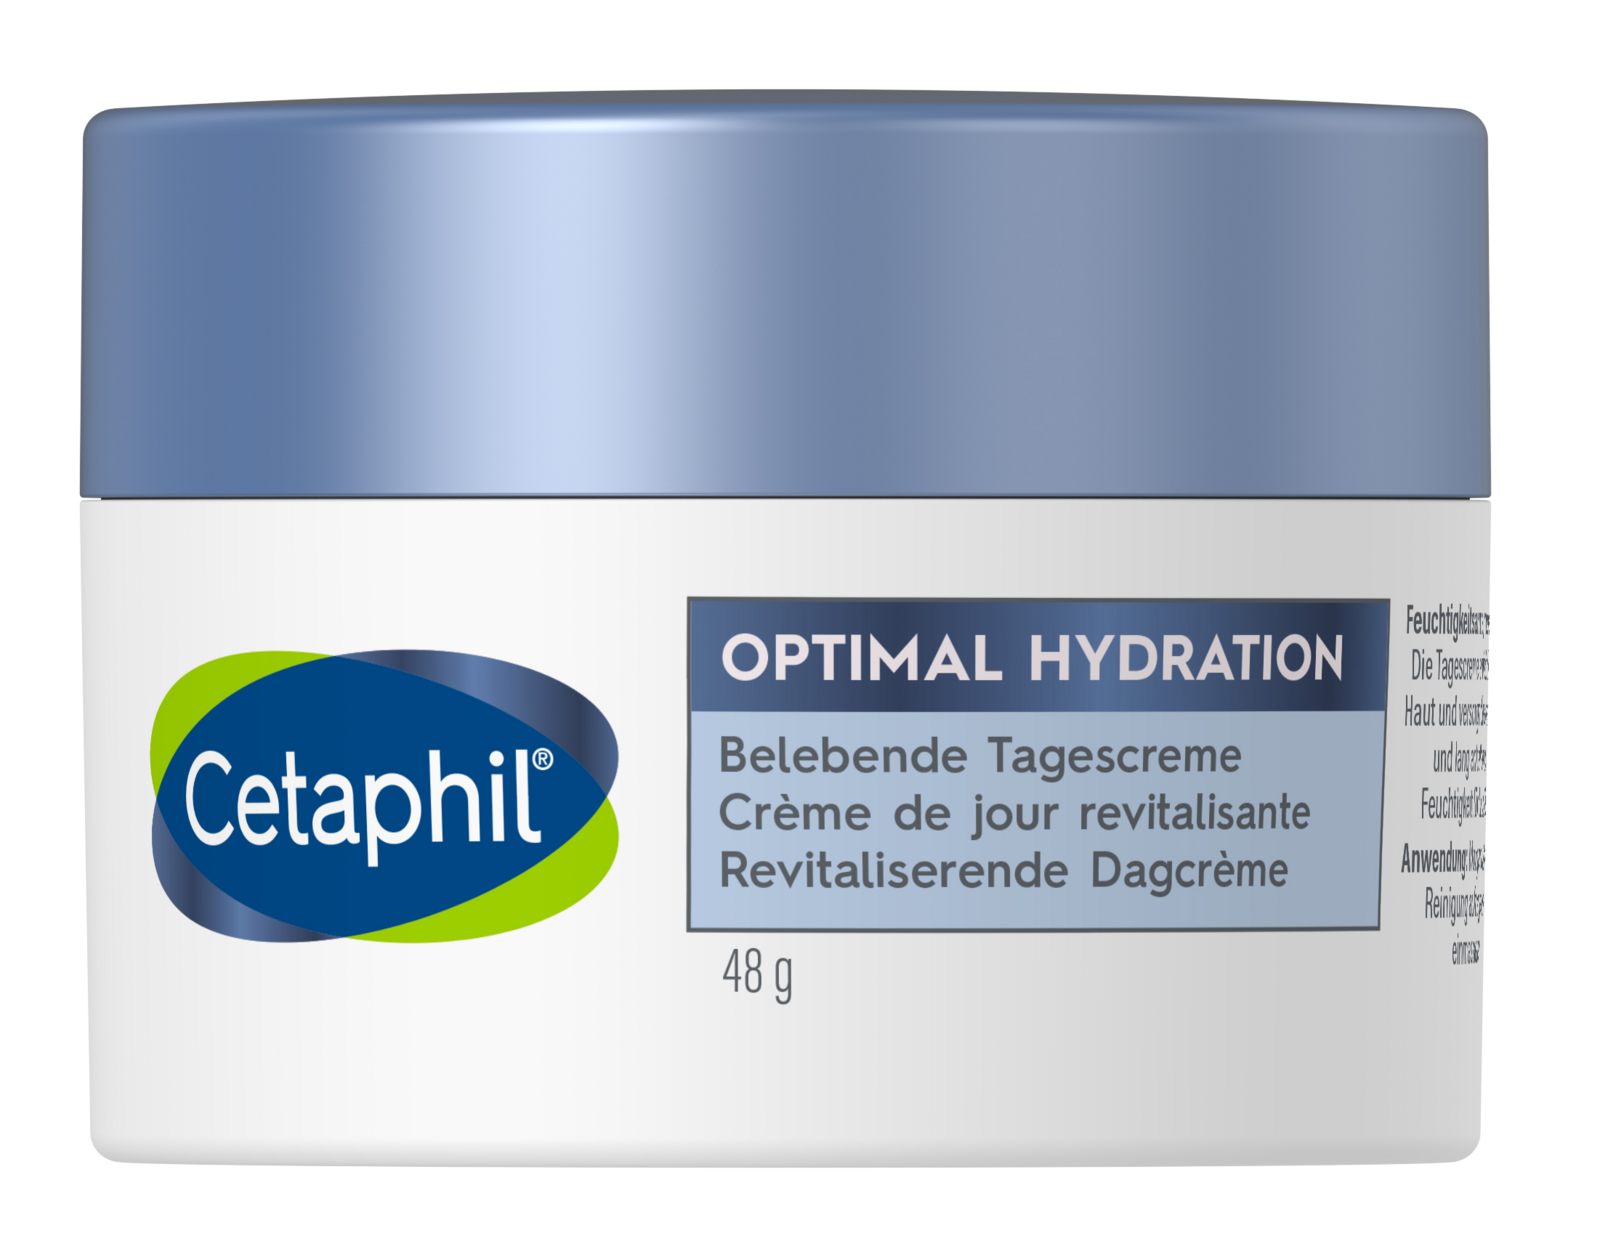 Cetaphil Optimal Hydration Revitaliserende Dagcreme